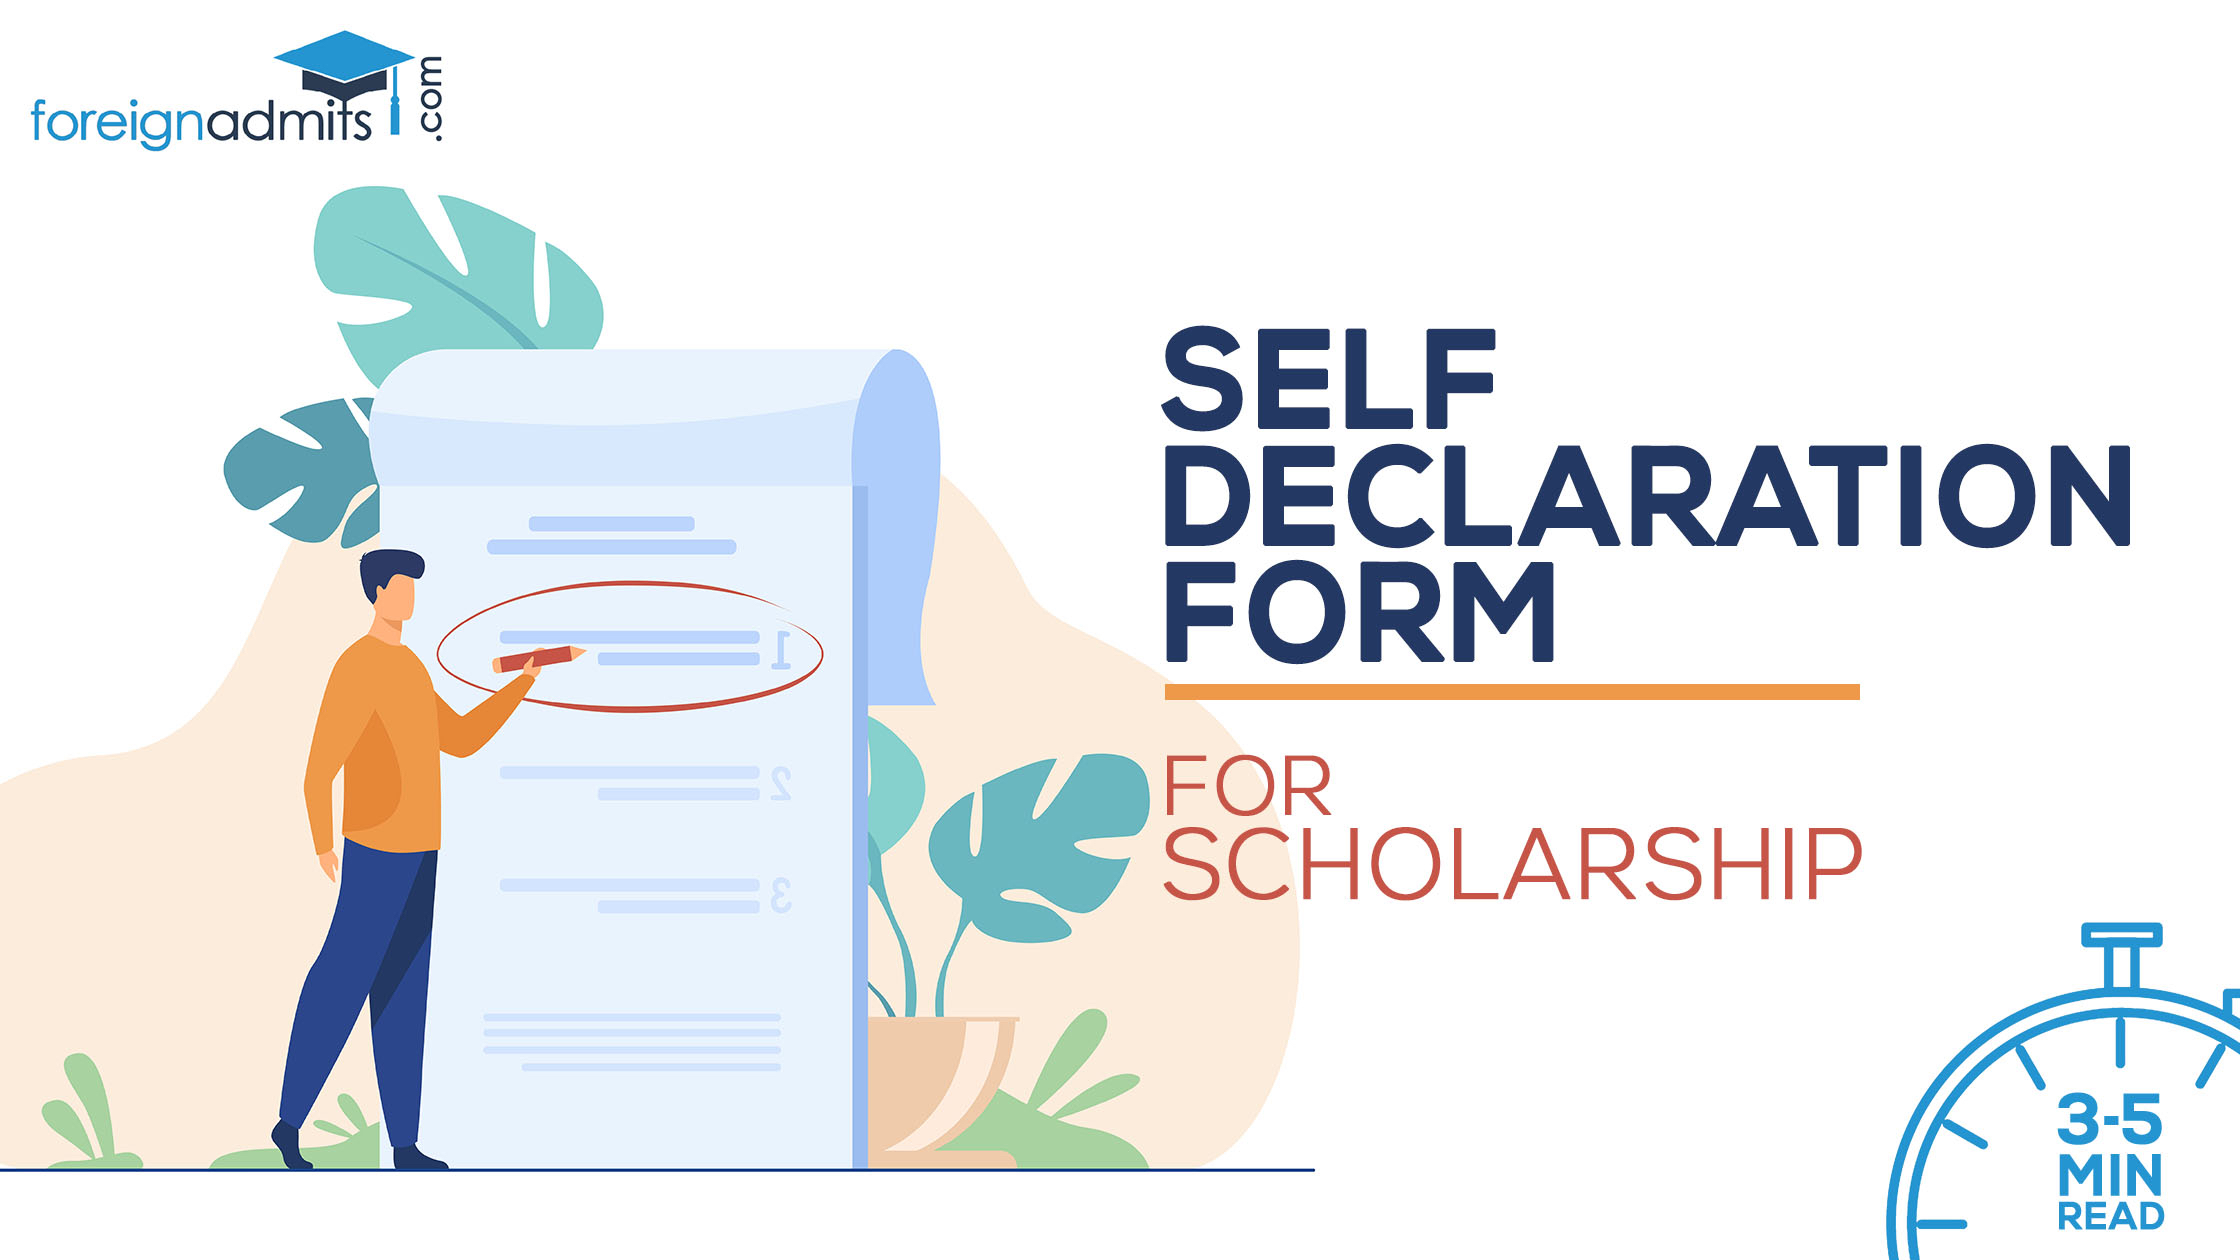 Self Declaration Form for Scholarship